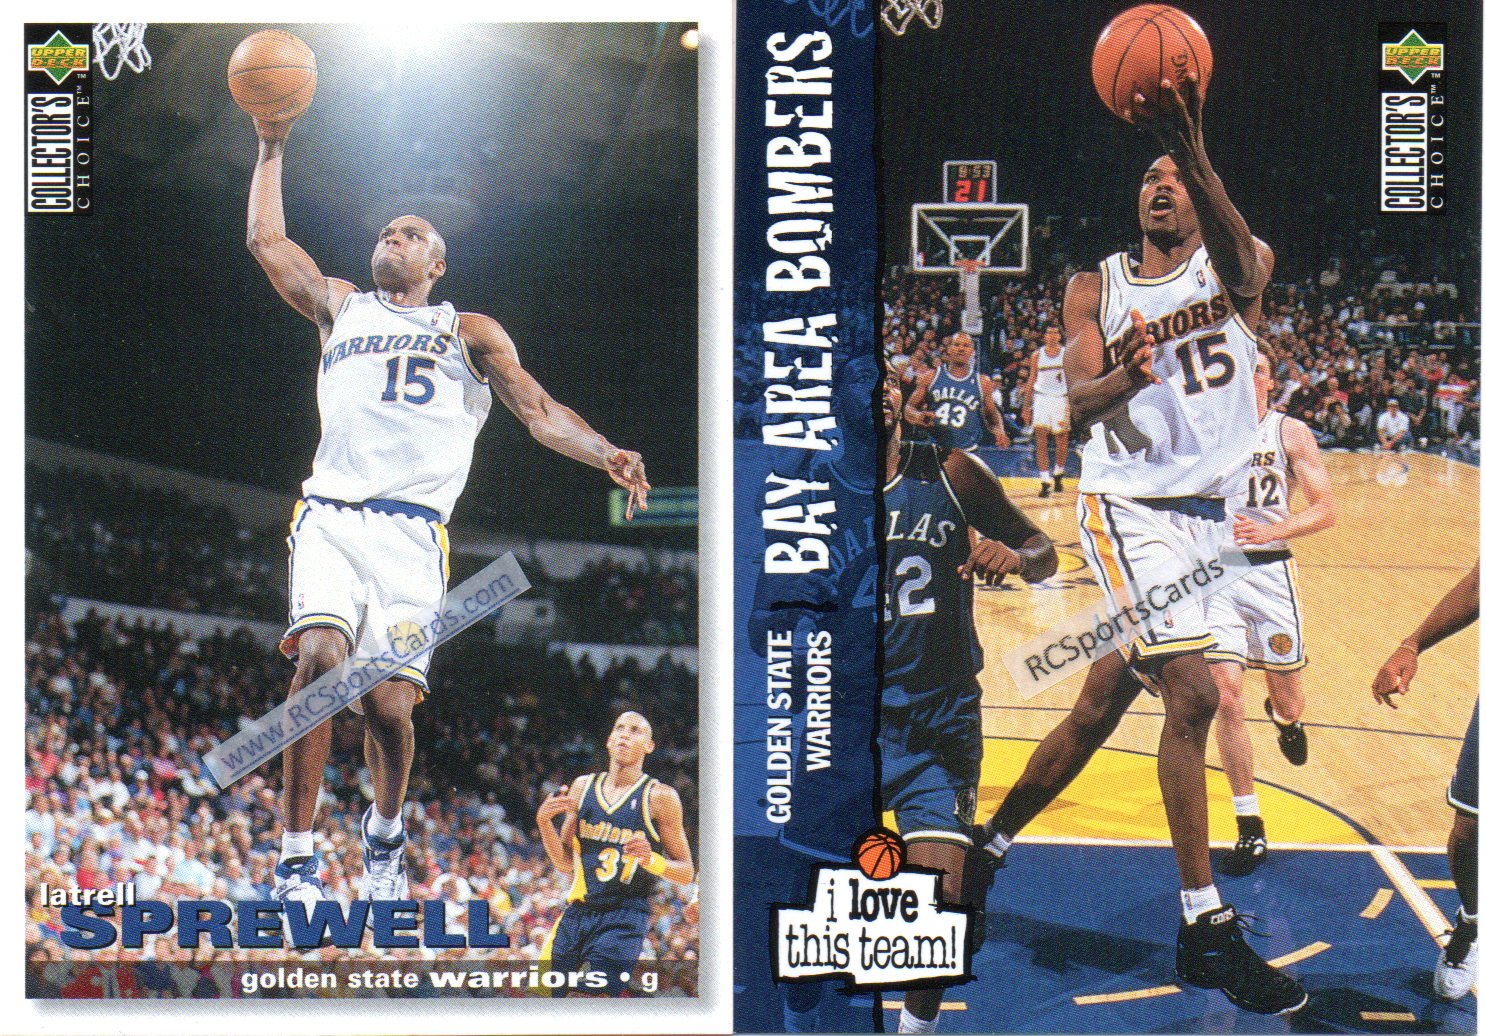 1995-96 Latrell Sprewell, Warriors Itm#N3020